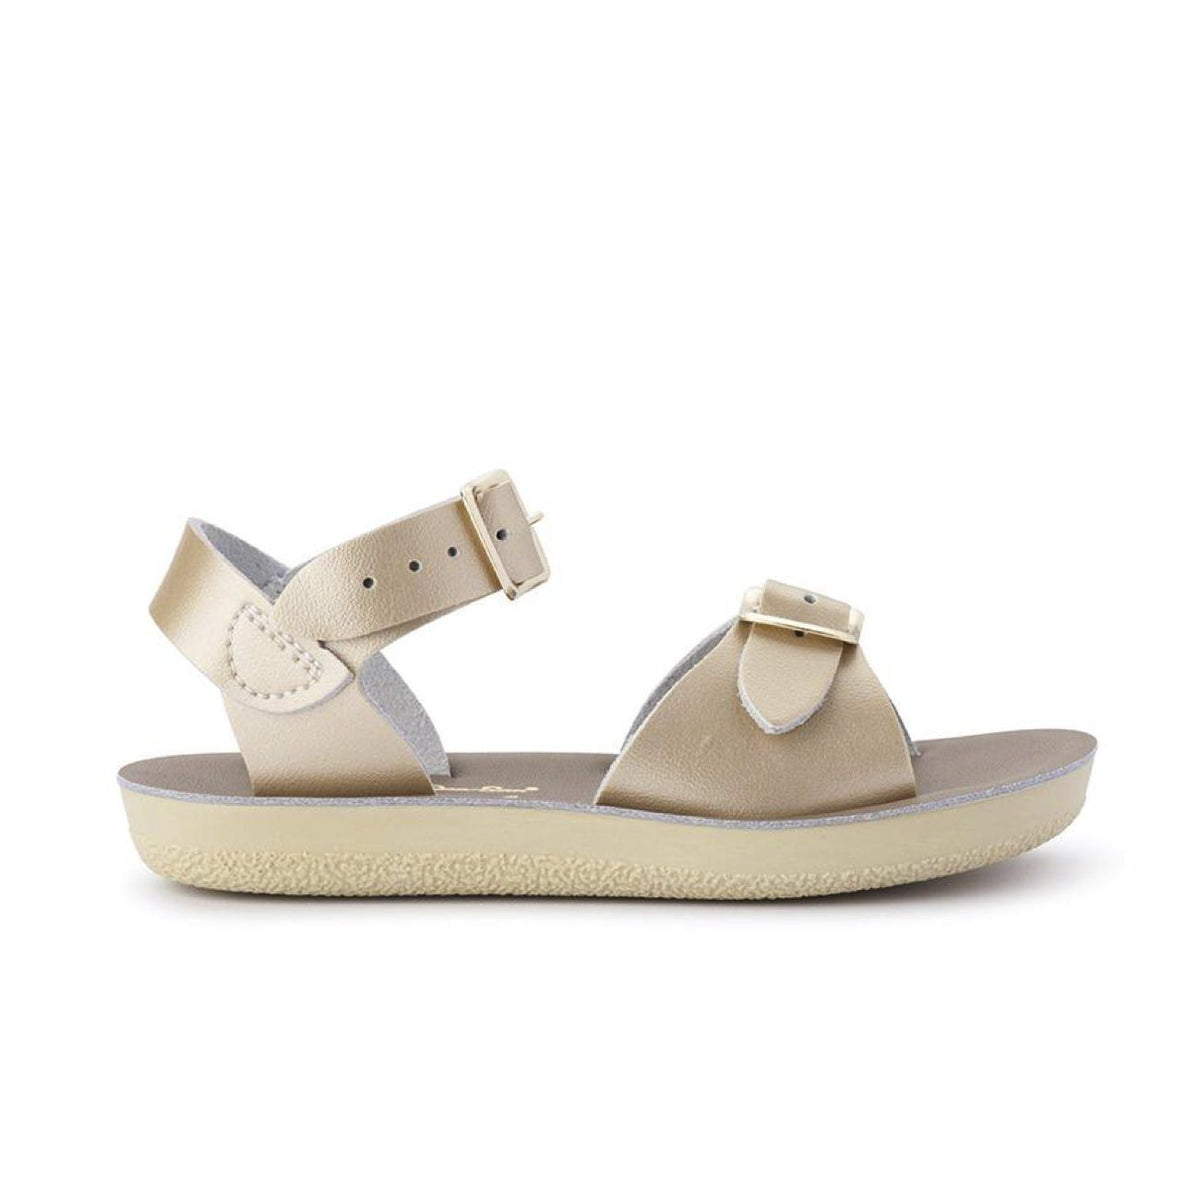 Salt Water Sandals, Sun-San Surfer, Infant &amp; Child, Gold Sandals Salt Water Sandals 